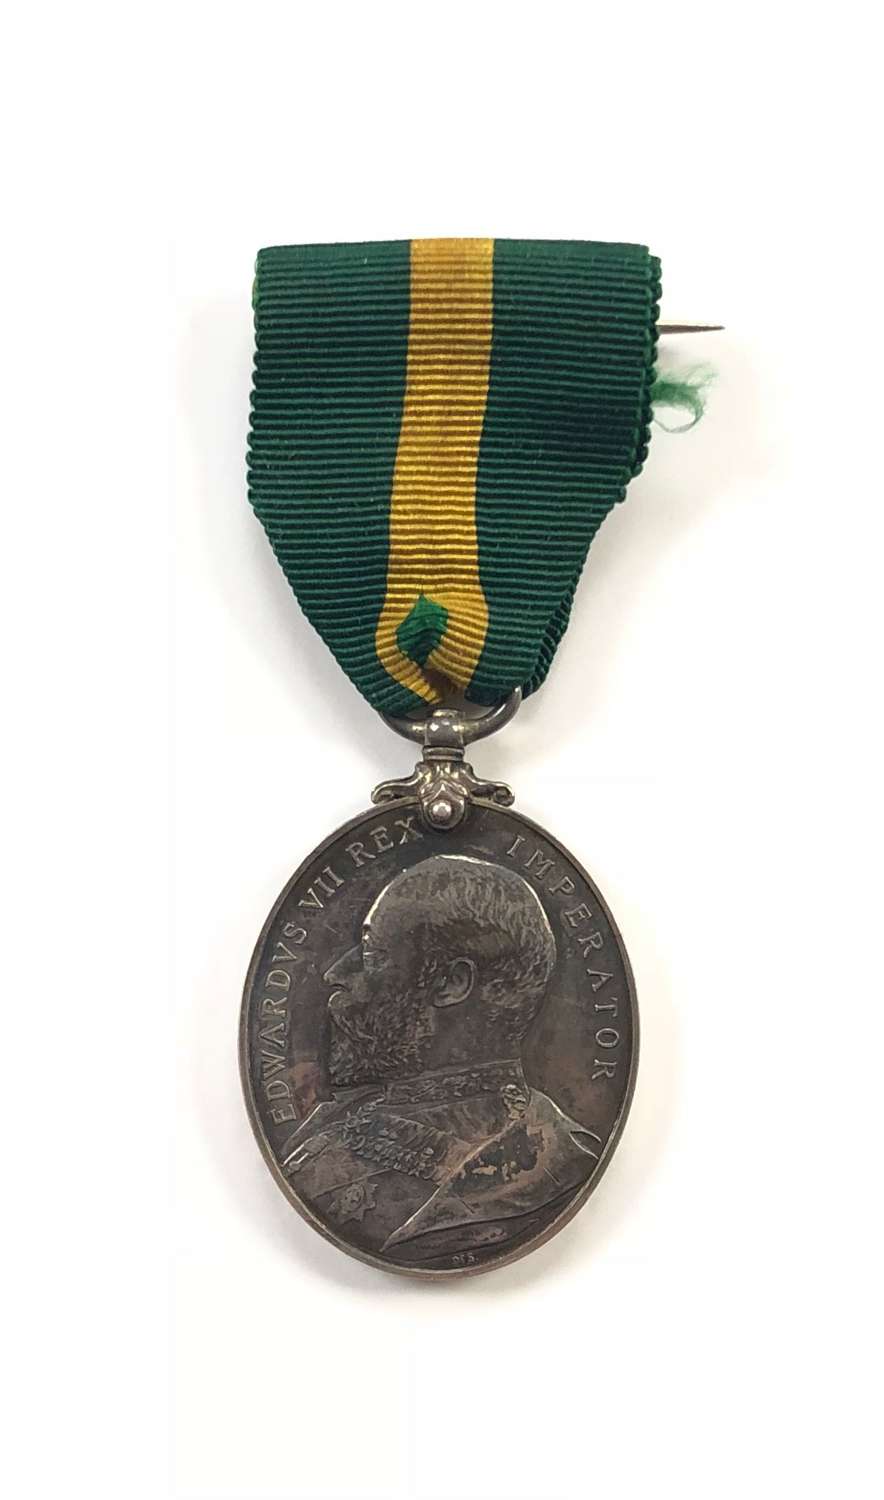 Edwardian 9th London Regiment Territorial Force Efficiency Medal